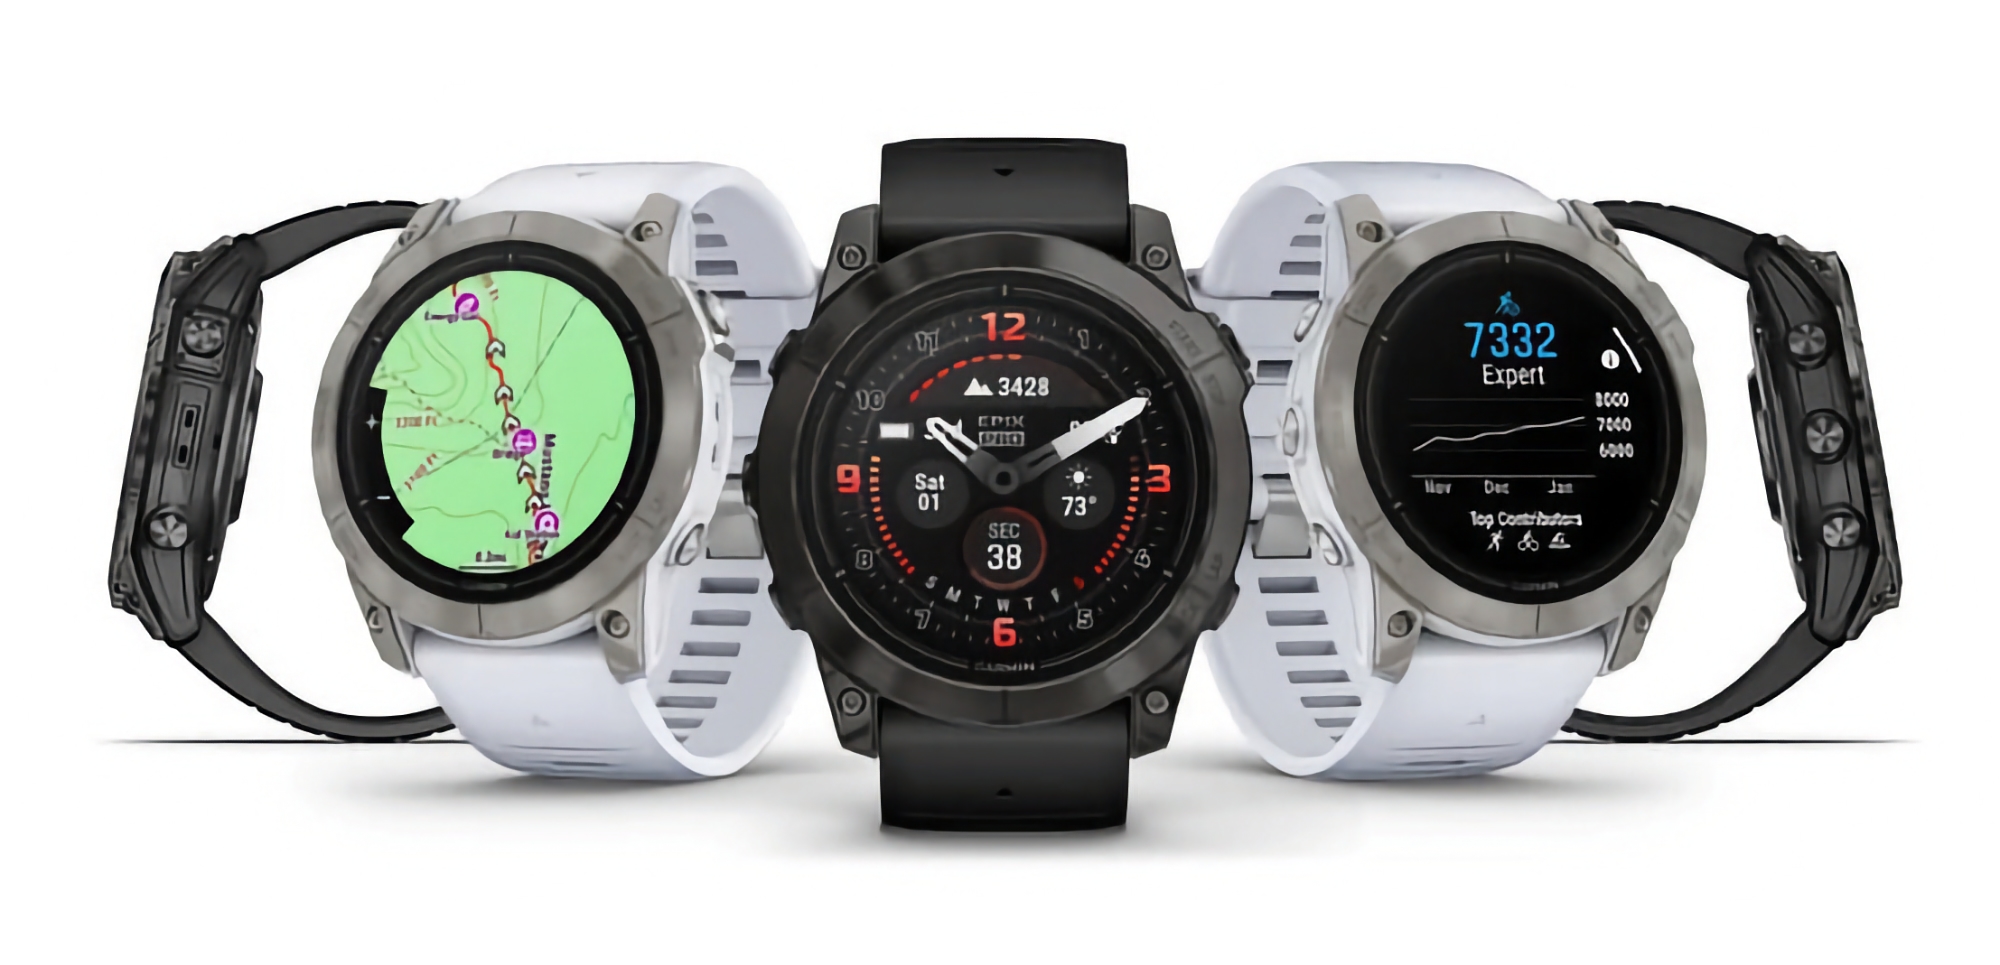 Garmin has released new beta firmware for 11 watch models